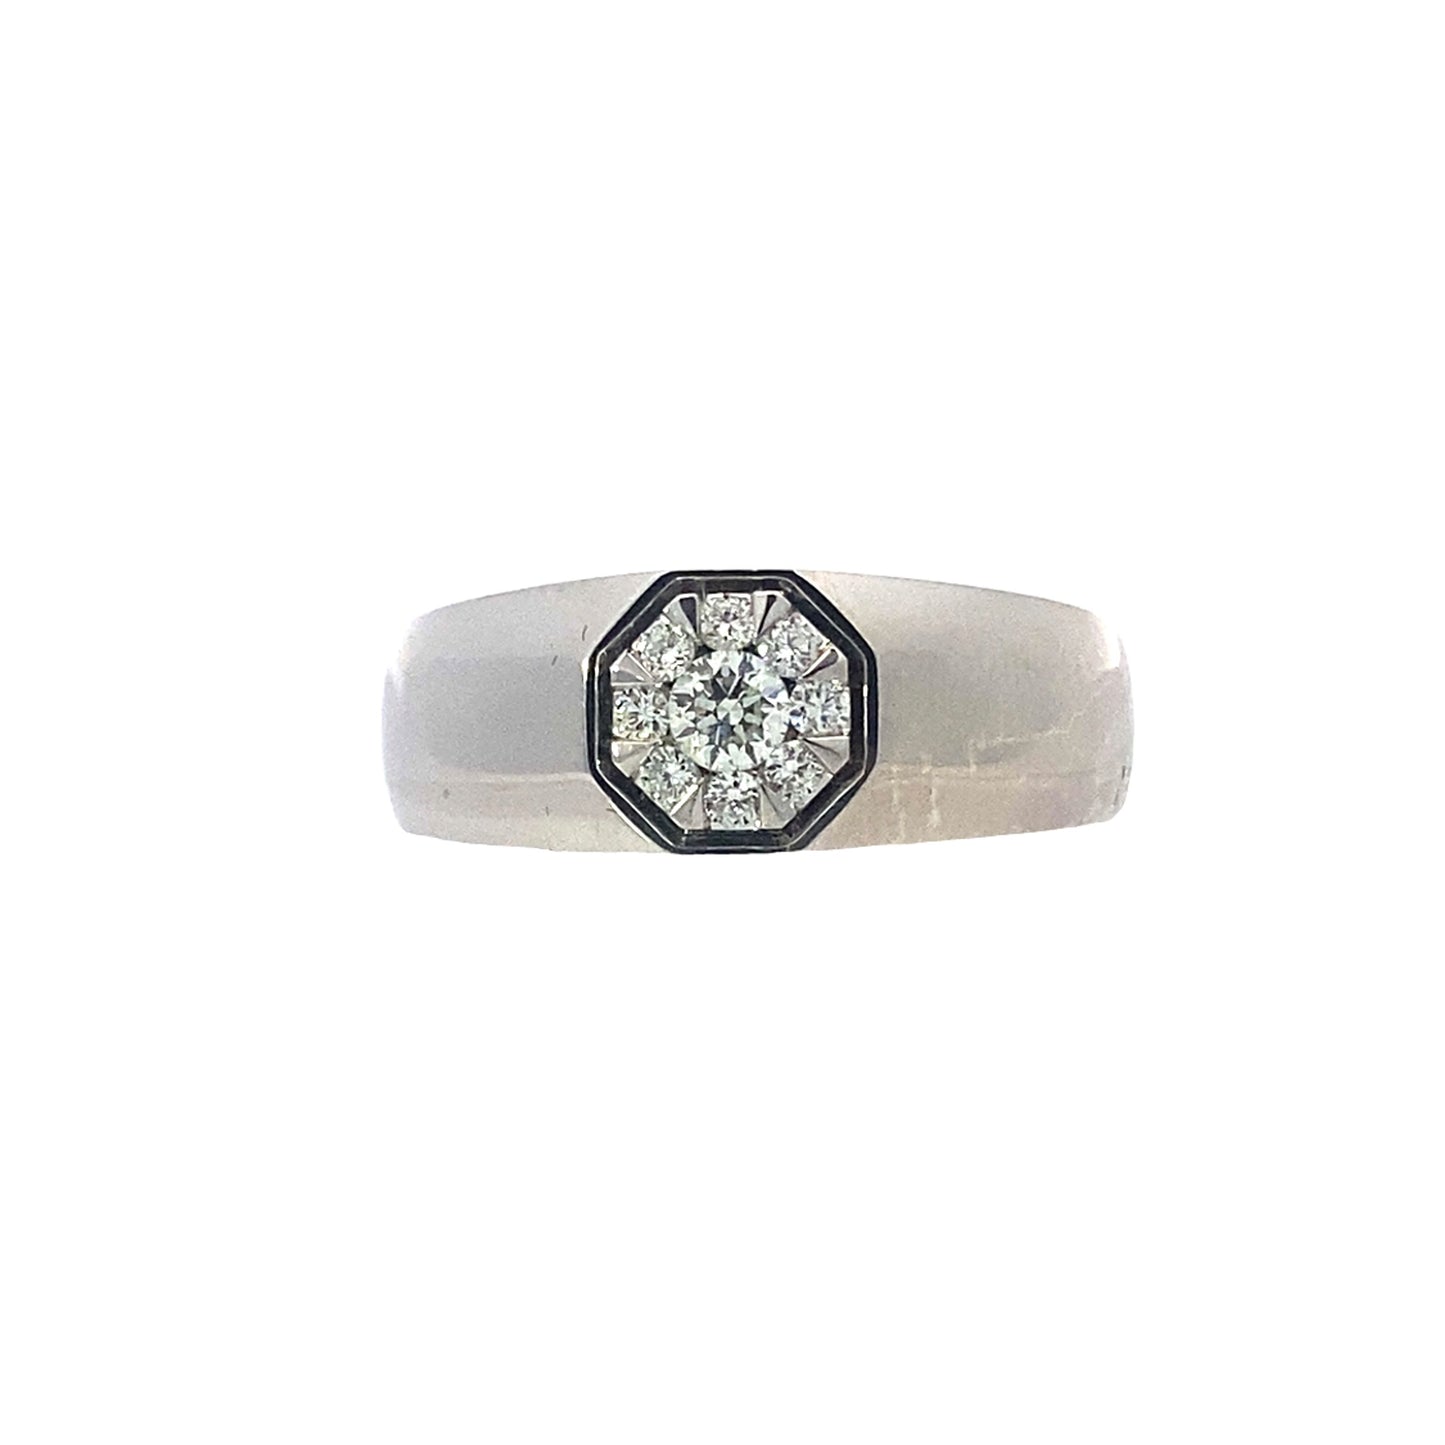 14K White Gold Mens Diamond Fashion Ring Size 10 3.2Dwt